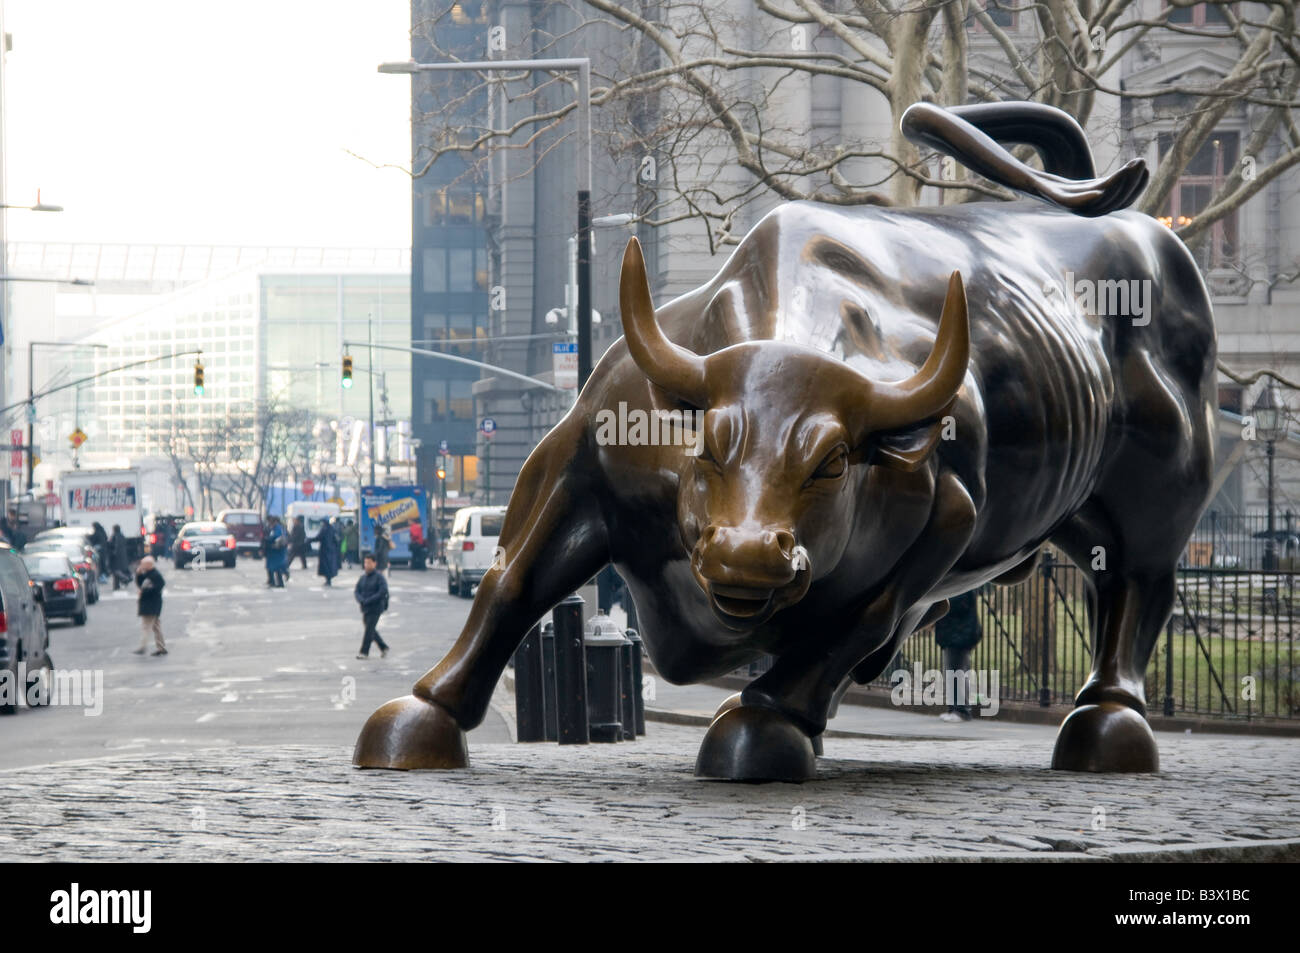 Bull cock. Бык Нью-Йорк фондовая биржа. Атакующий бык скульптура Нью-Йорк. Бык на Уолл-стрит в Нью-Йорке. Бык с Уолл стрит.